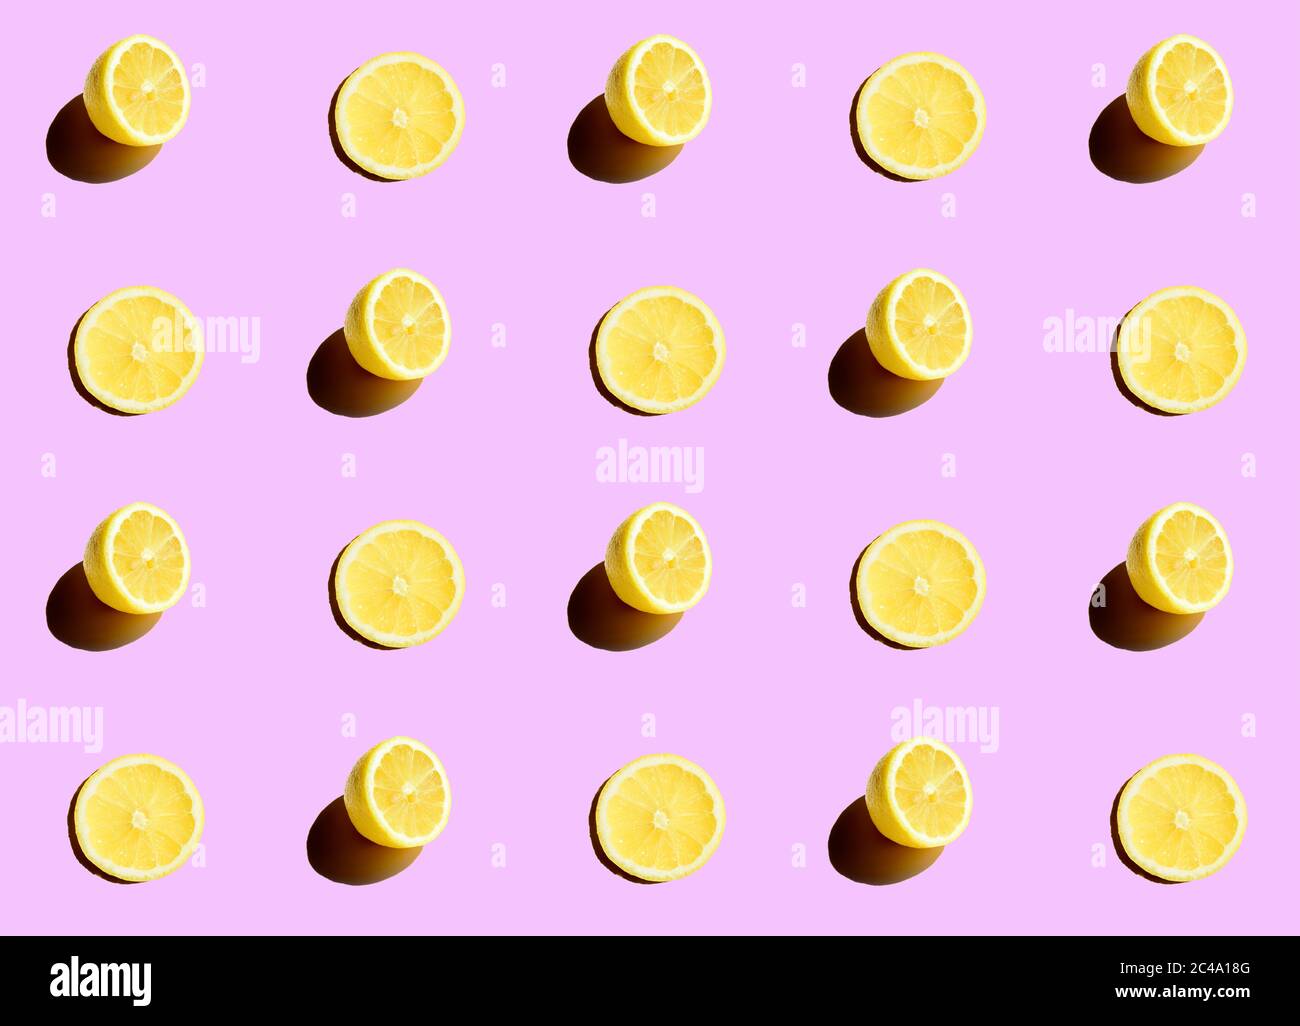 Series of half cut lemons on a purple background Stock Photo